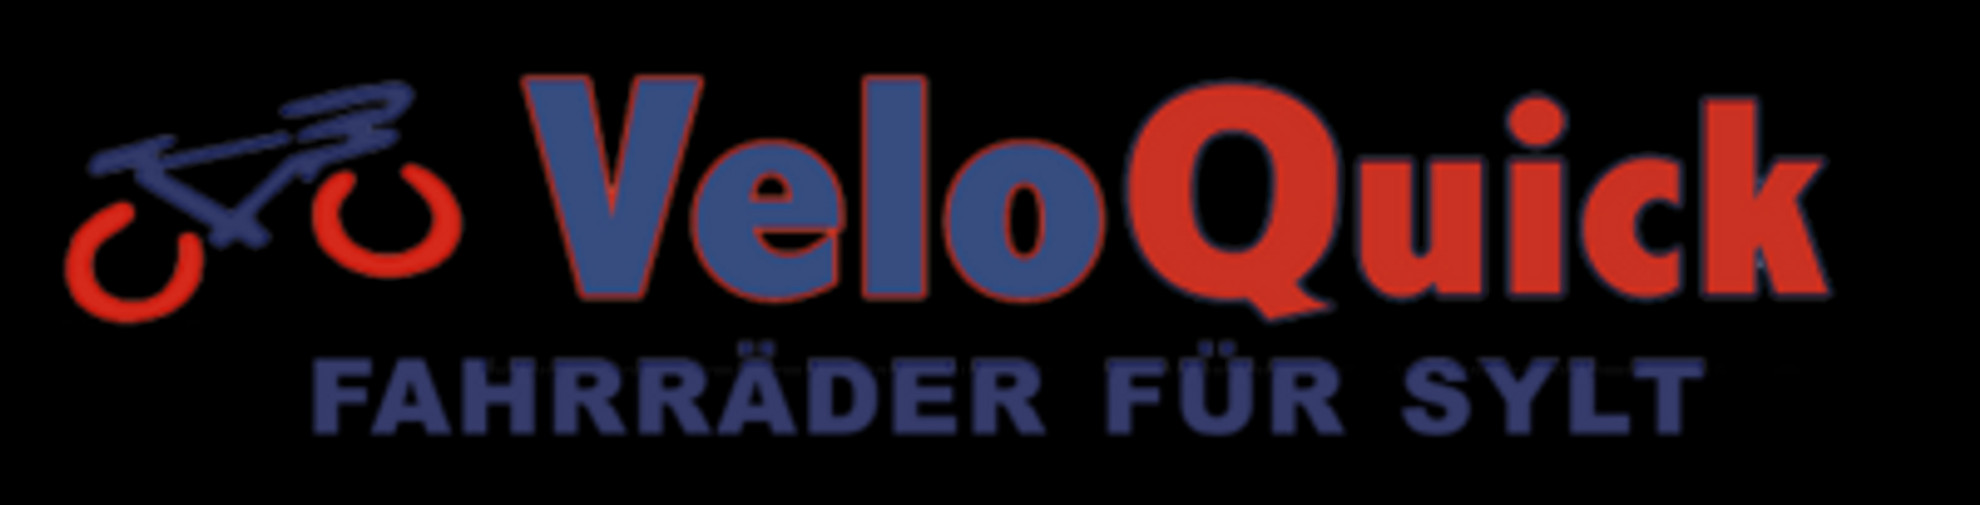 VeloQuick-Logo-591x150-1-400x102.png